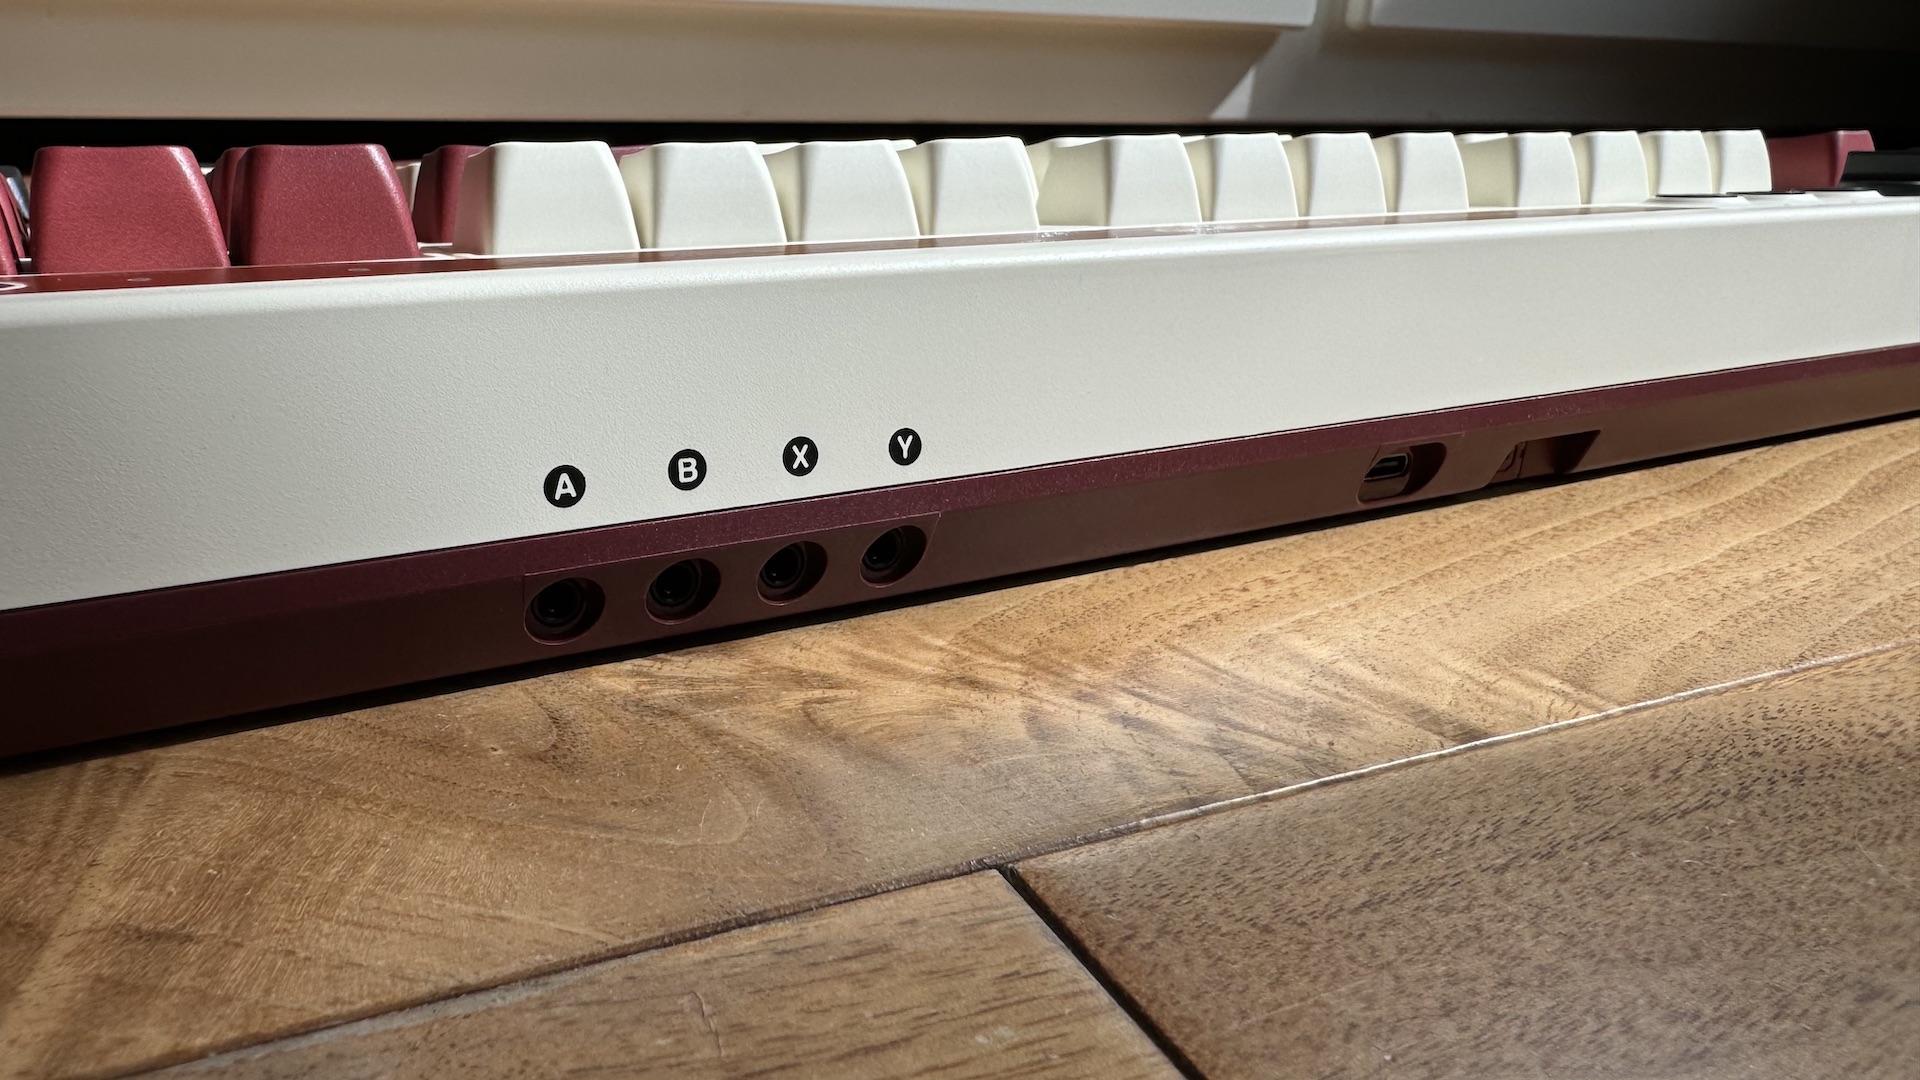 8BitDo Retro Mechanical Keyboard on a wooden floor